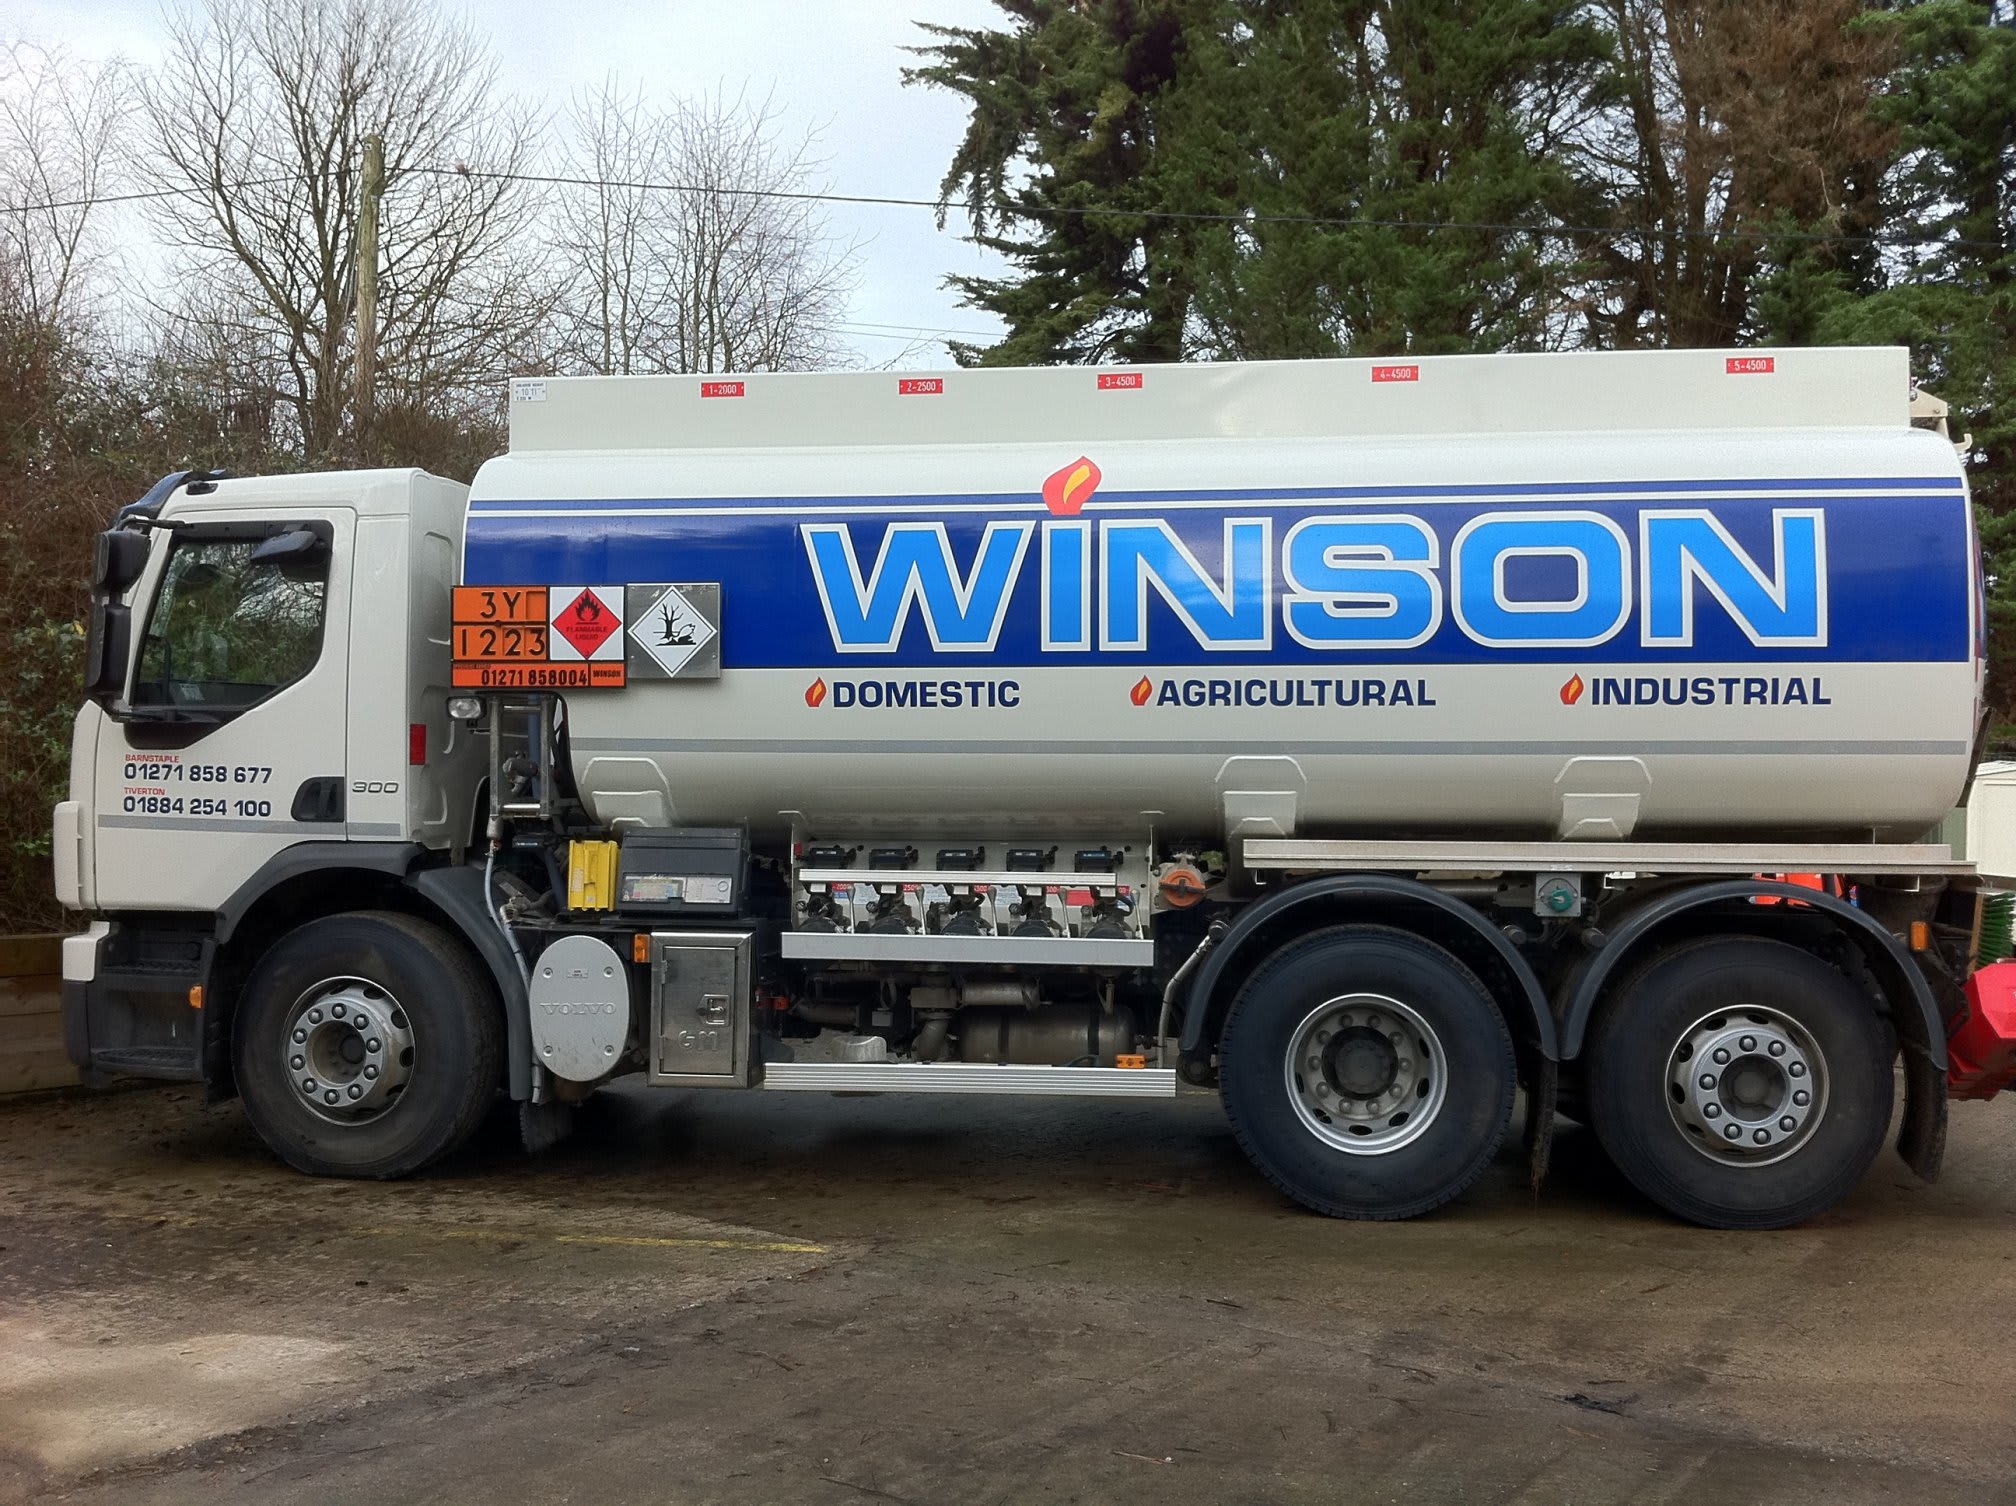 Winson Fuel & Oils Barnstaple 01271 858677